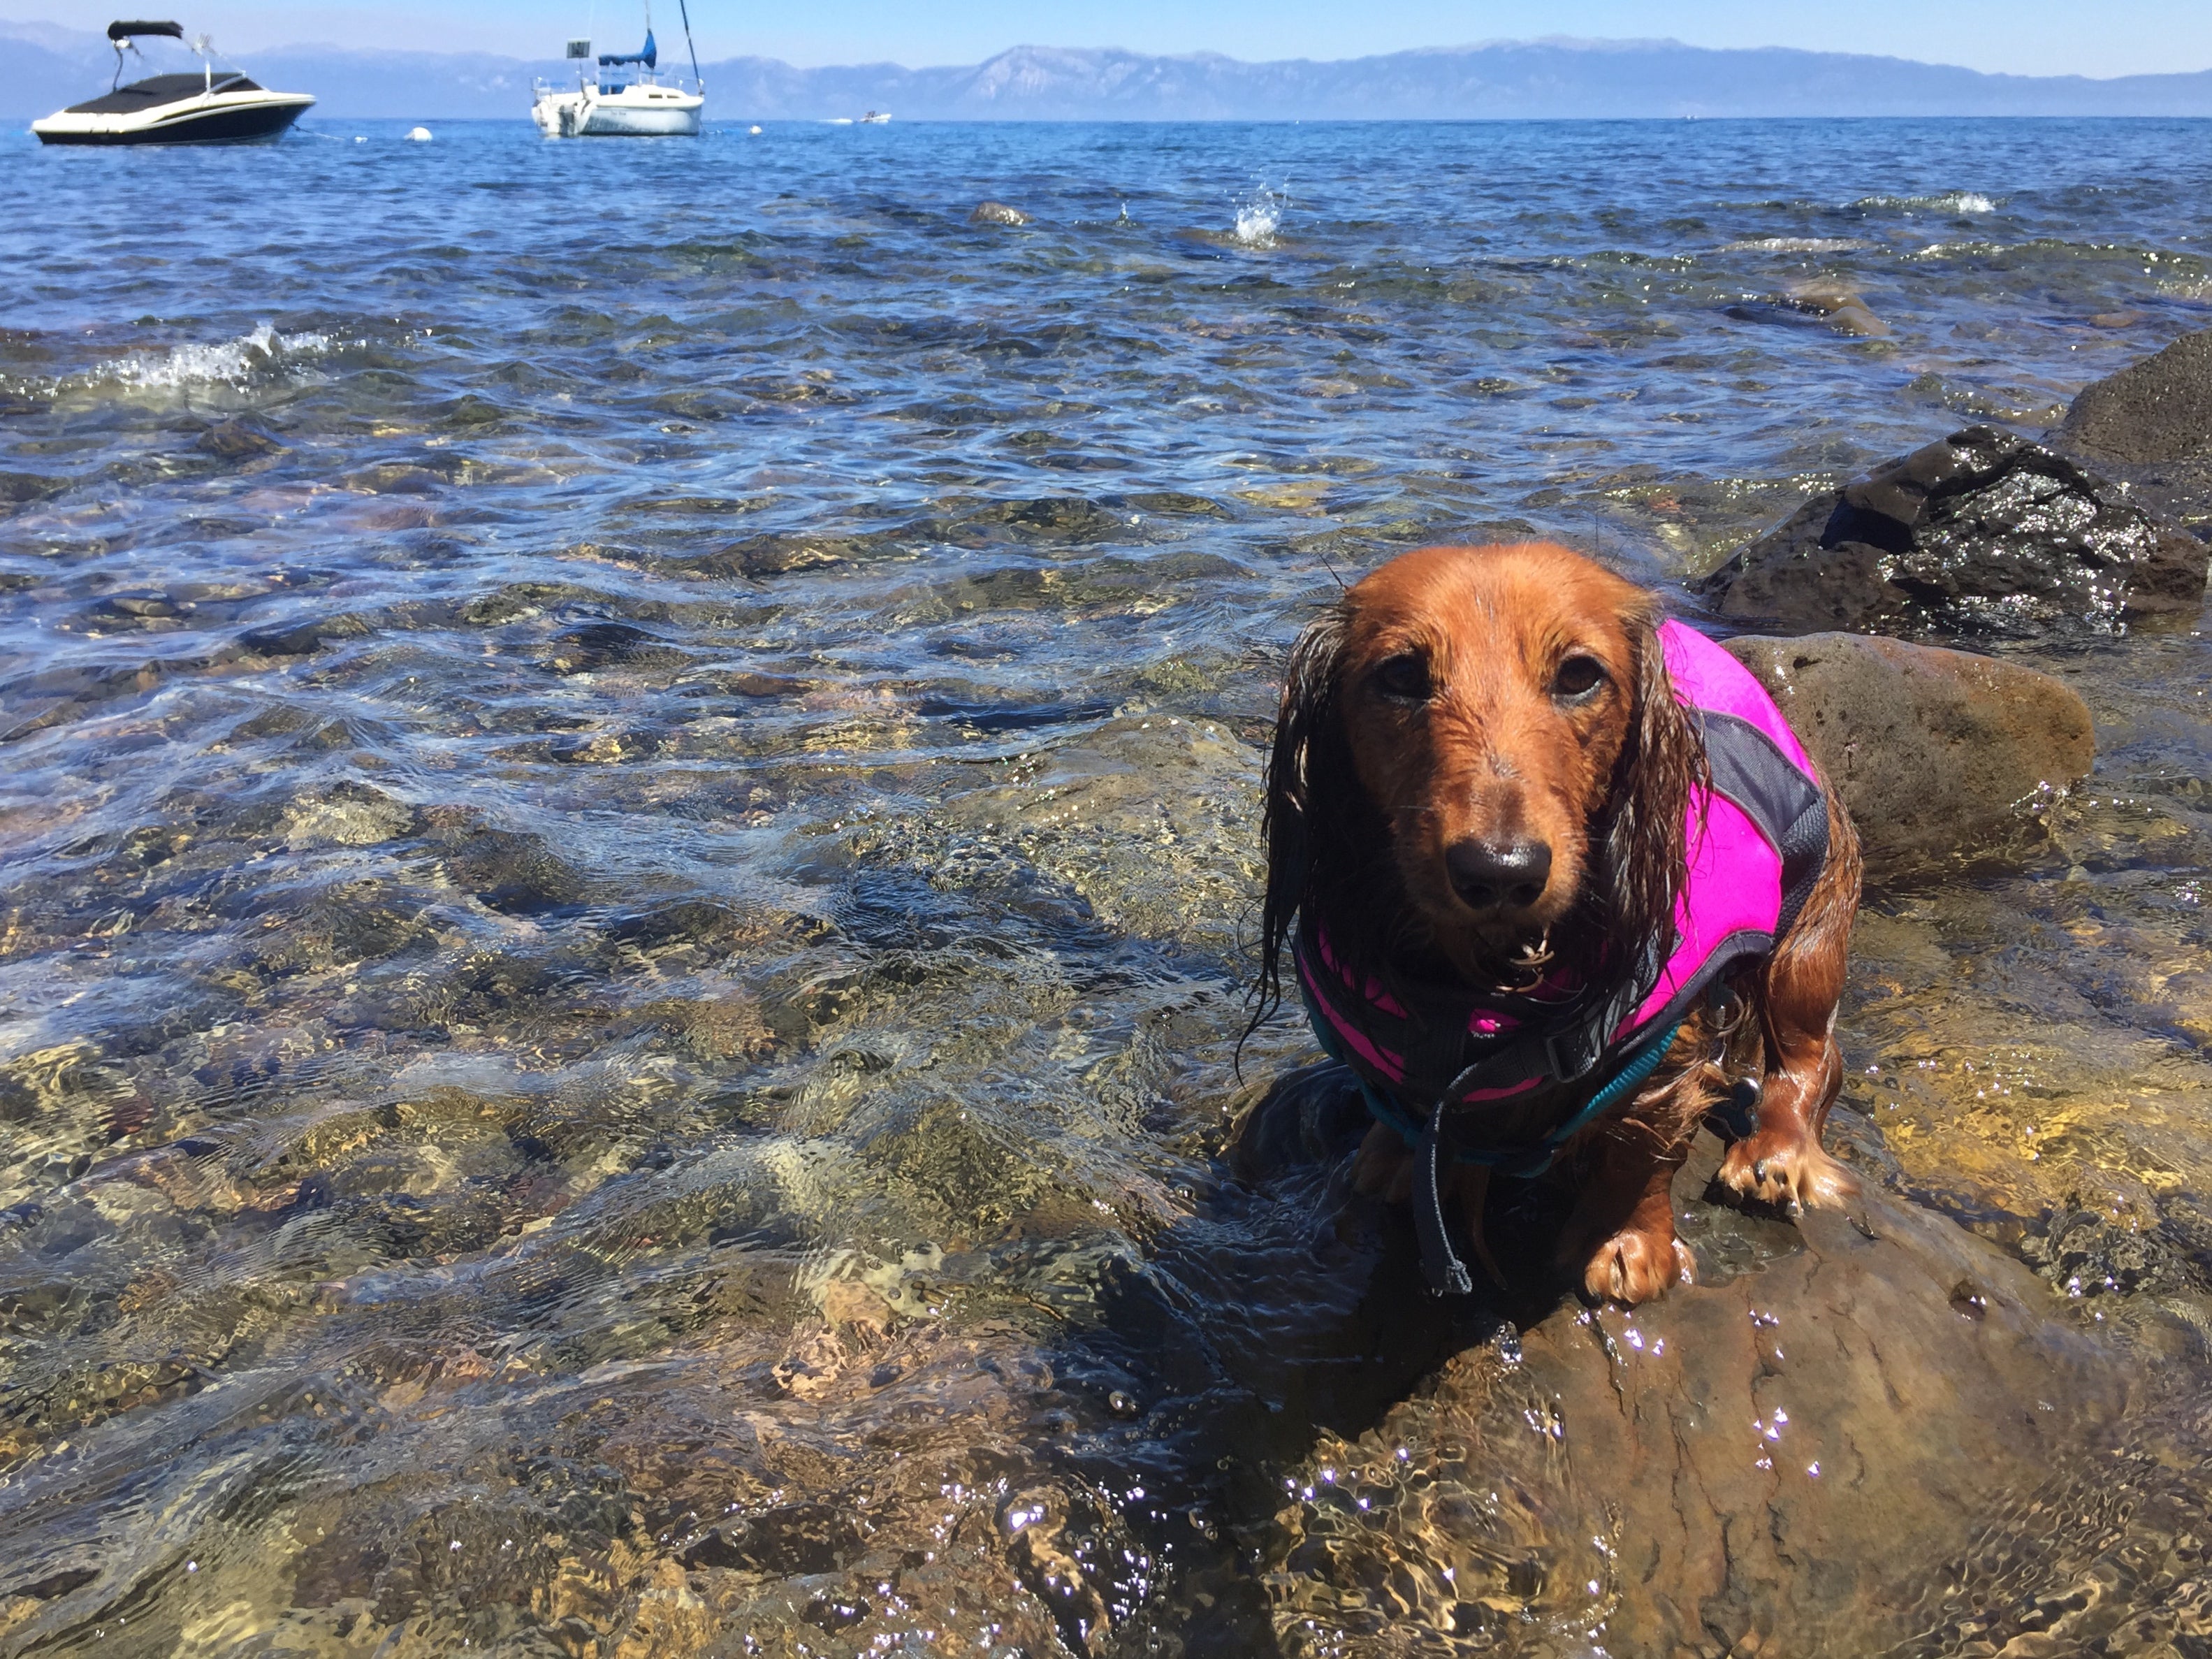 Django (@djangothegent) in his Good2Go dog life jacket takes a break from swimming on the shore of Lake Tahoe, California